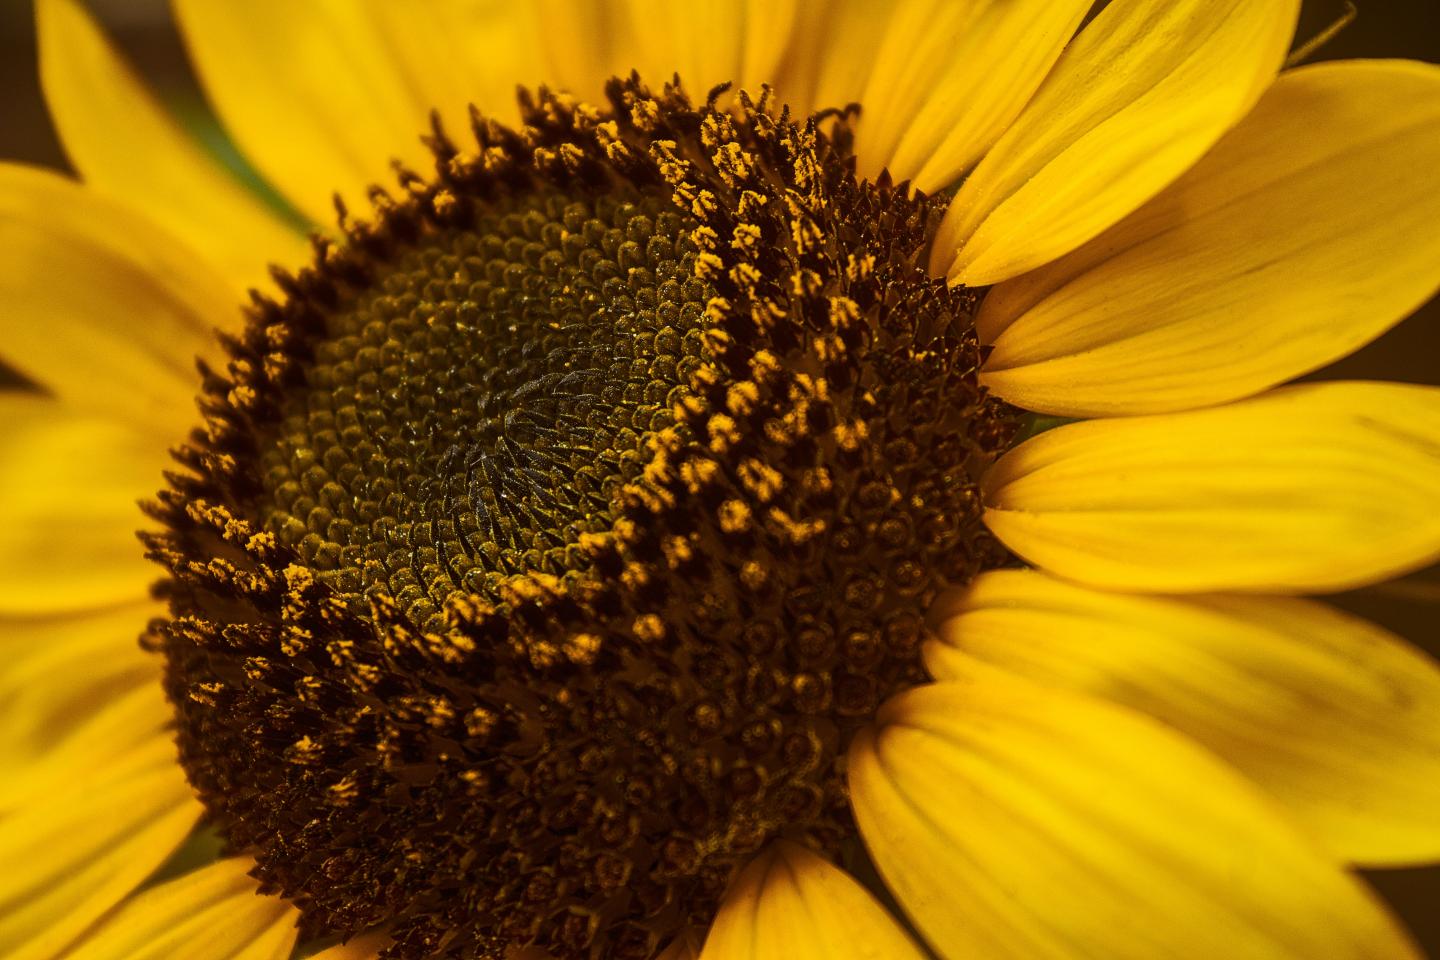 Sunflower 